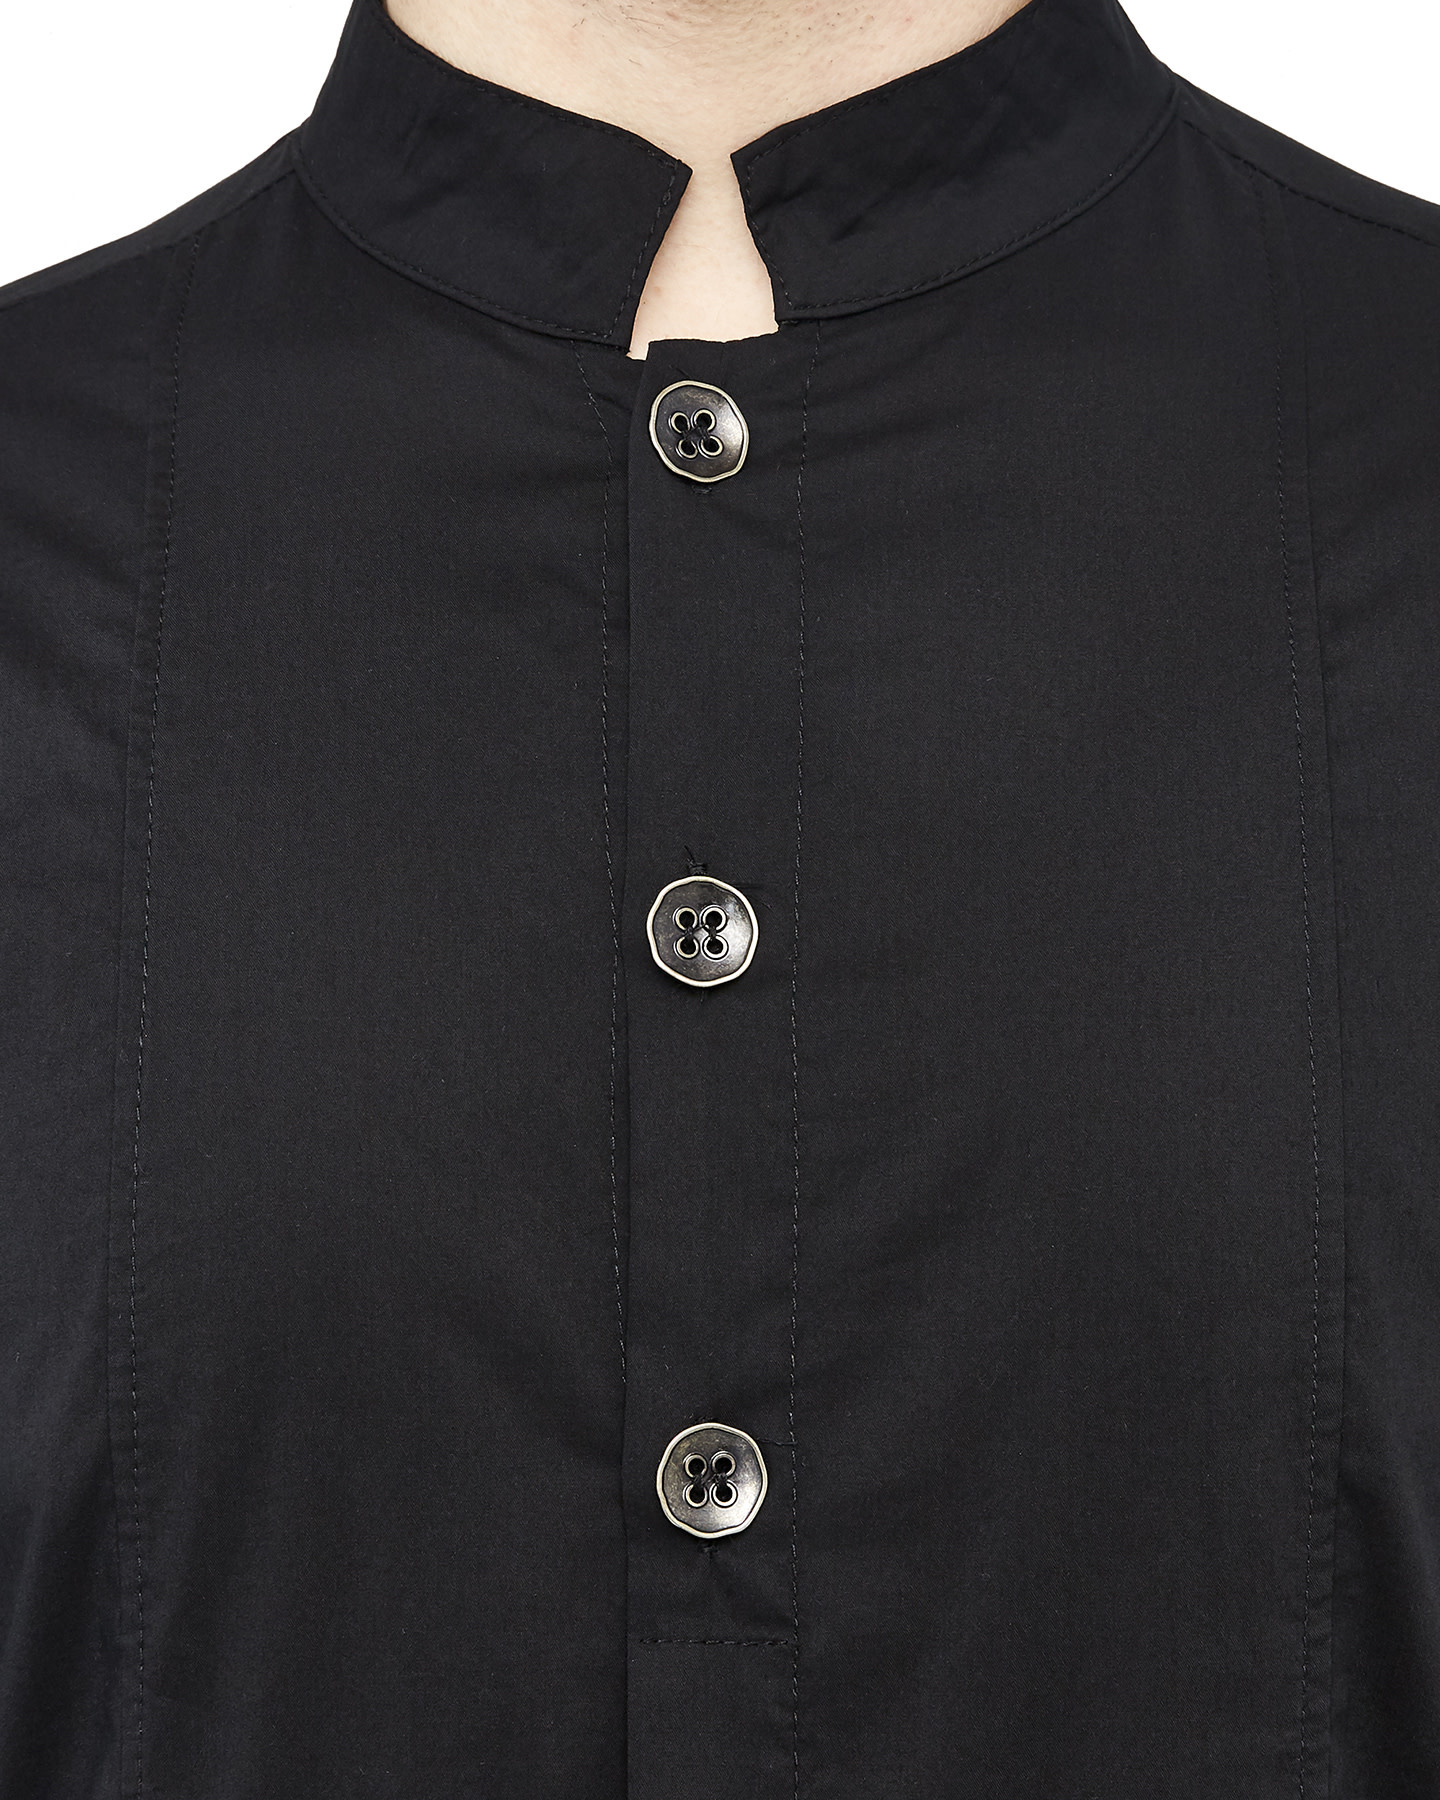 Mandarin collar shirt - Traditional manufacturing - THE NINES